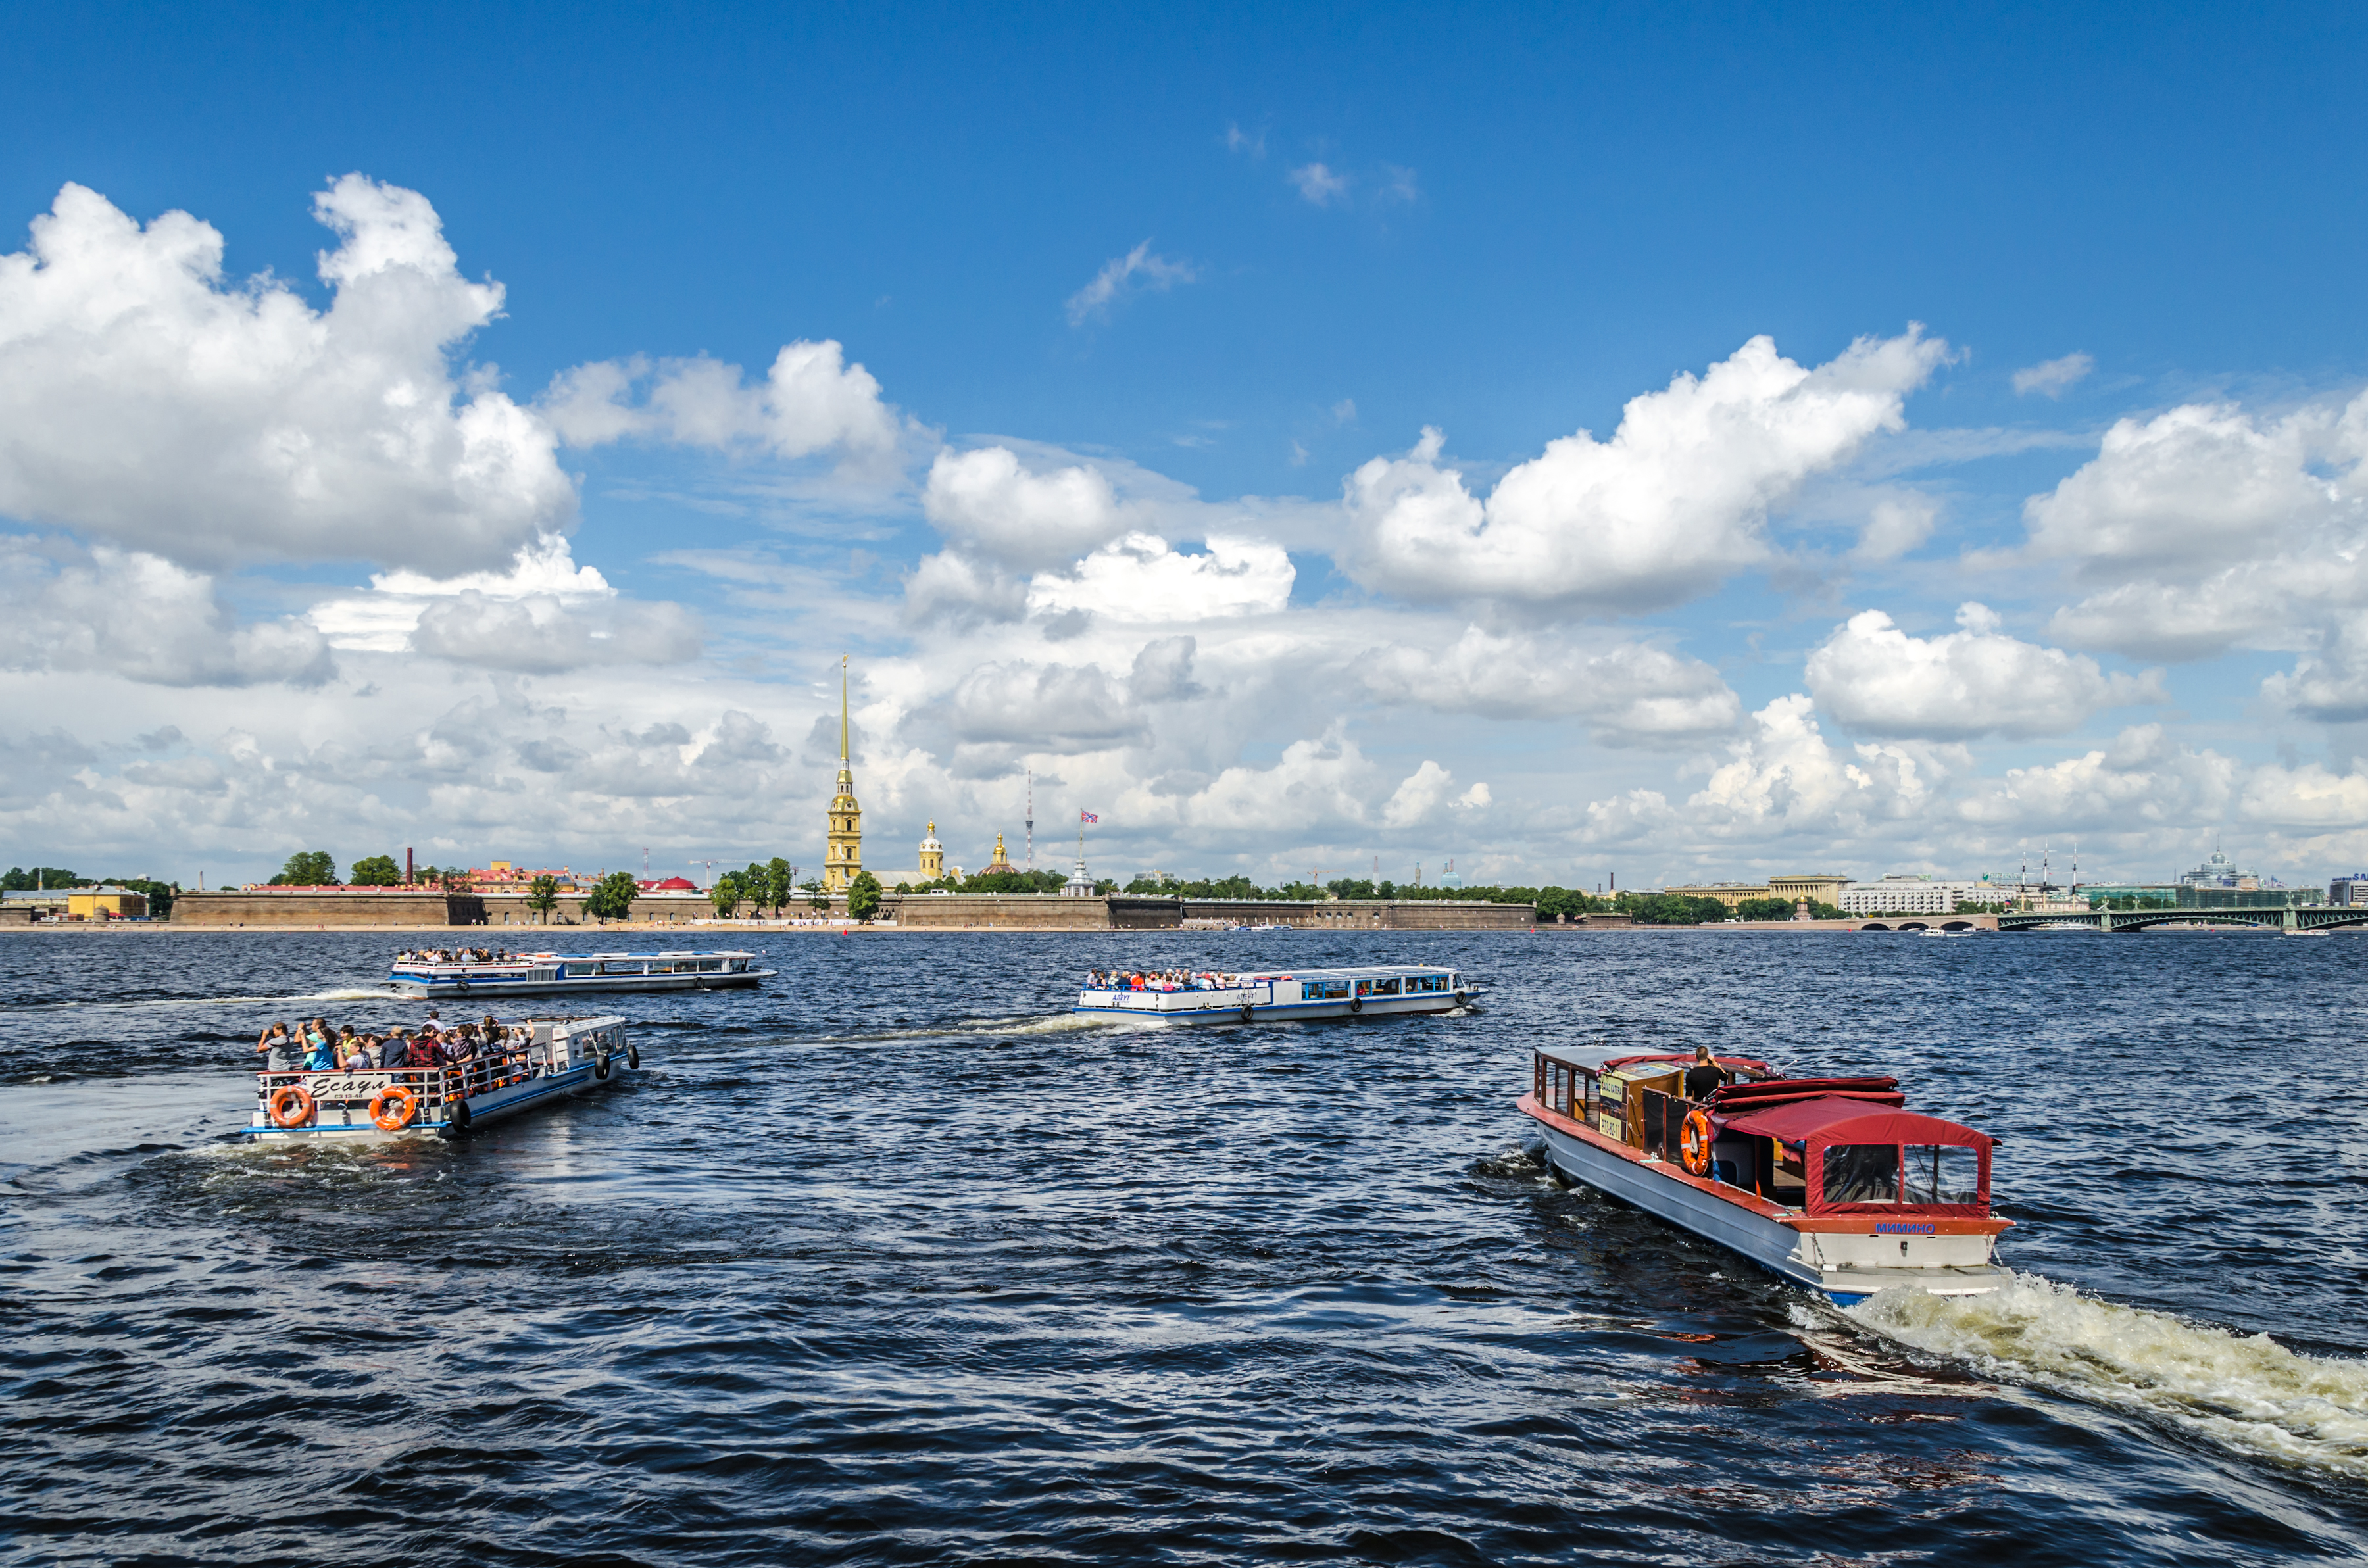 Boats on Big Neva river